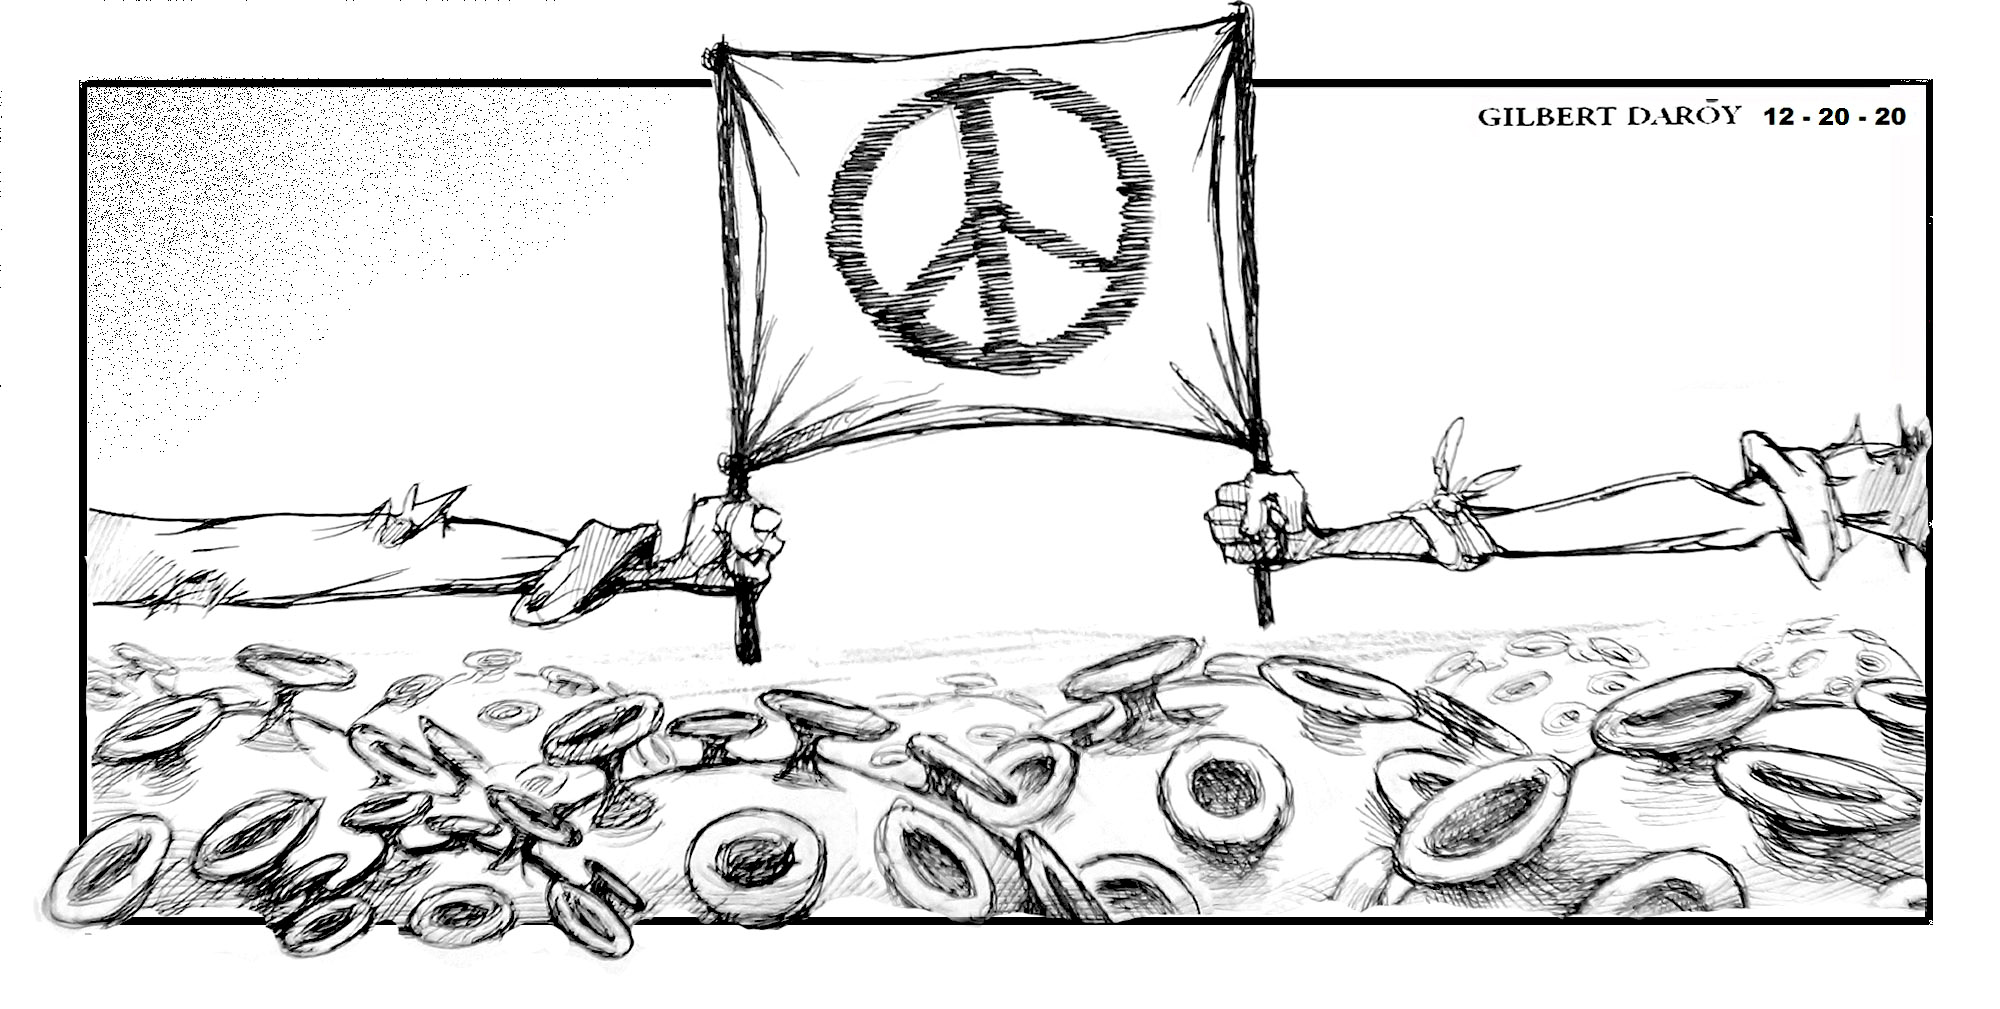 Editorial cartoon